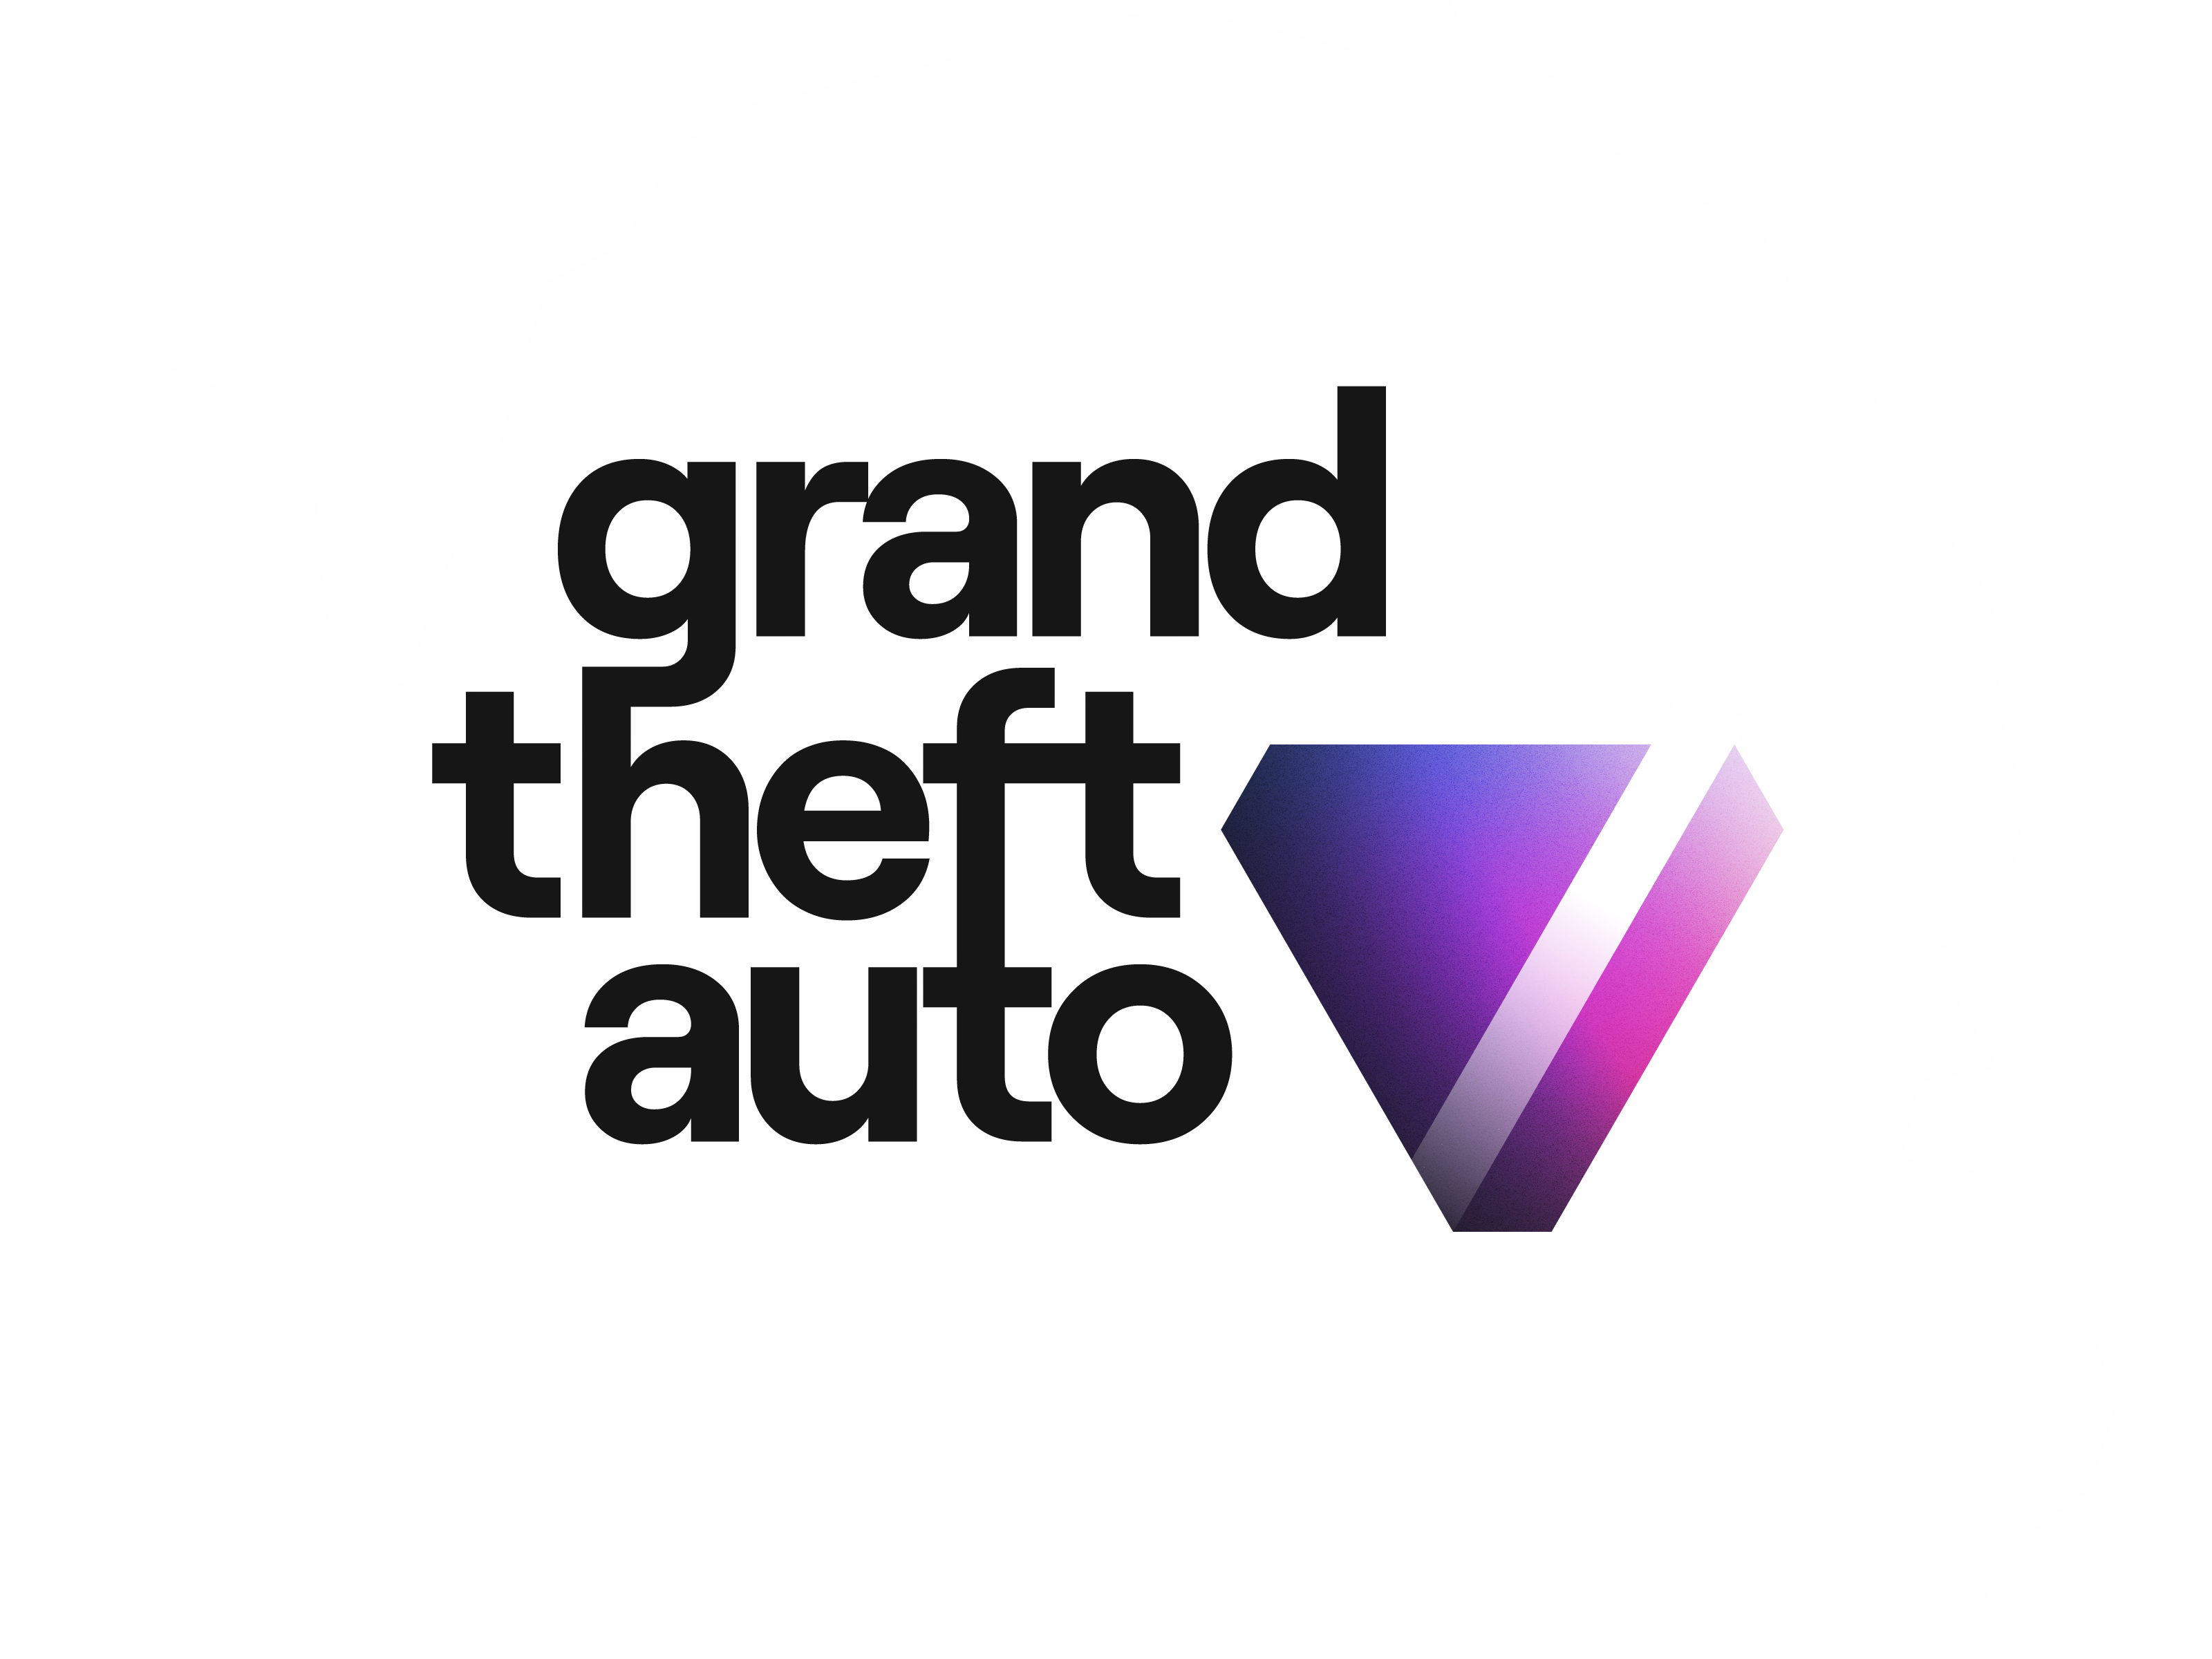 Download Gta Pic Auto Theft Grand HQ PNG Image | FreePNGImg